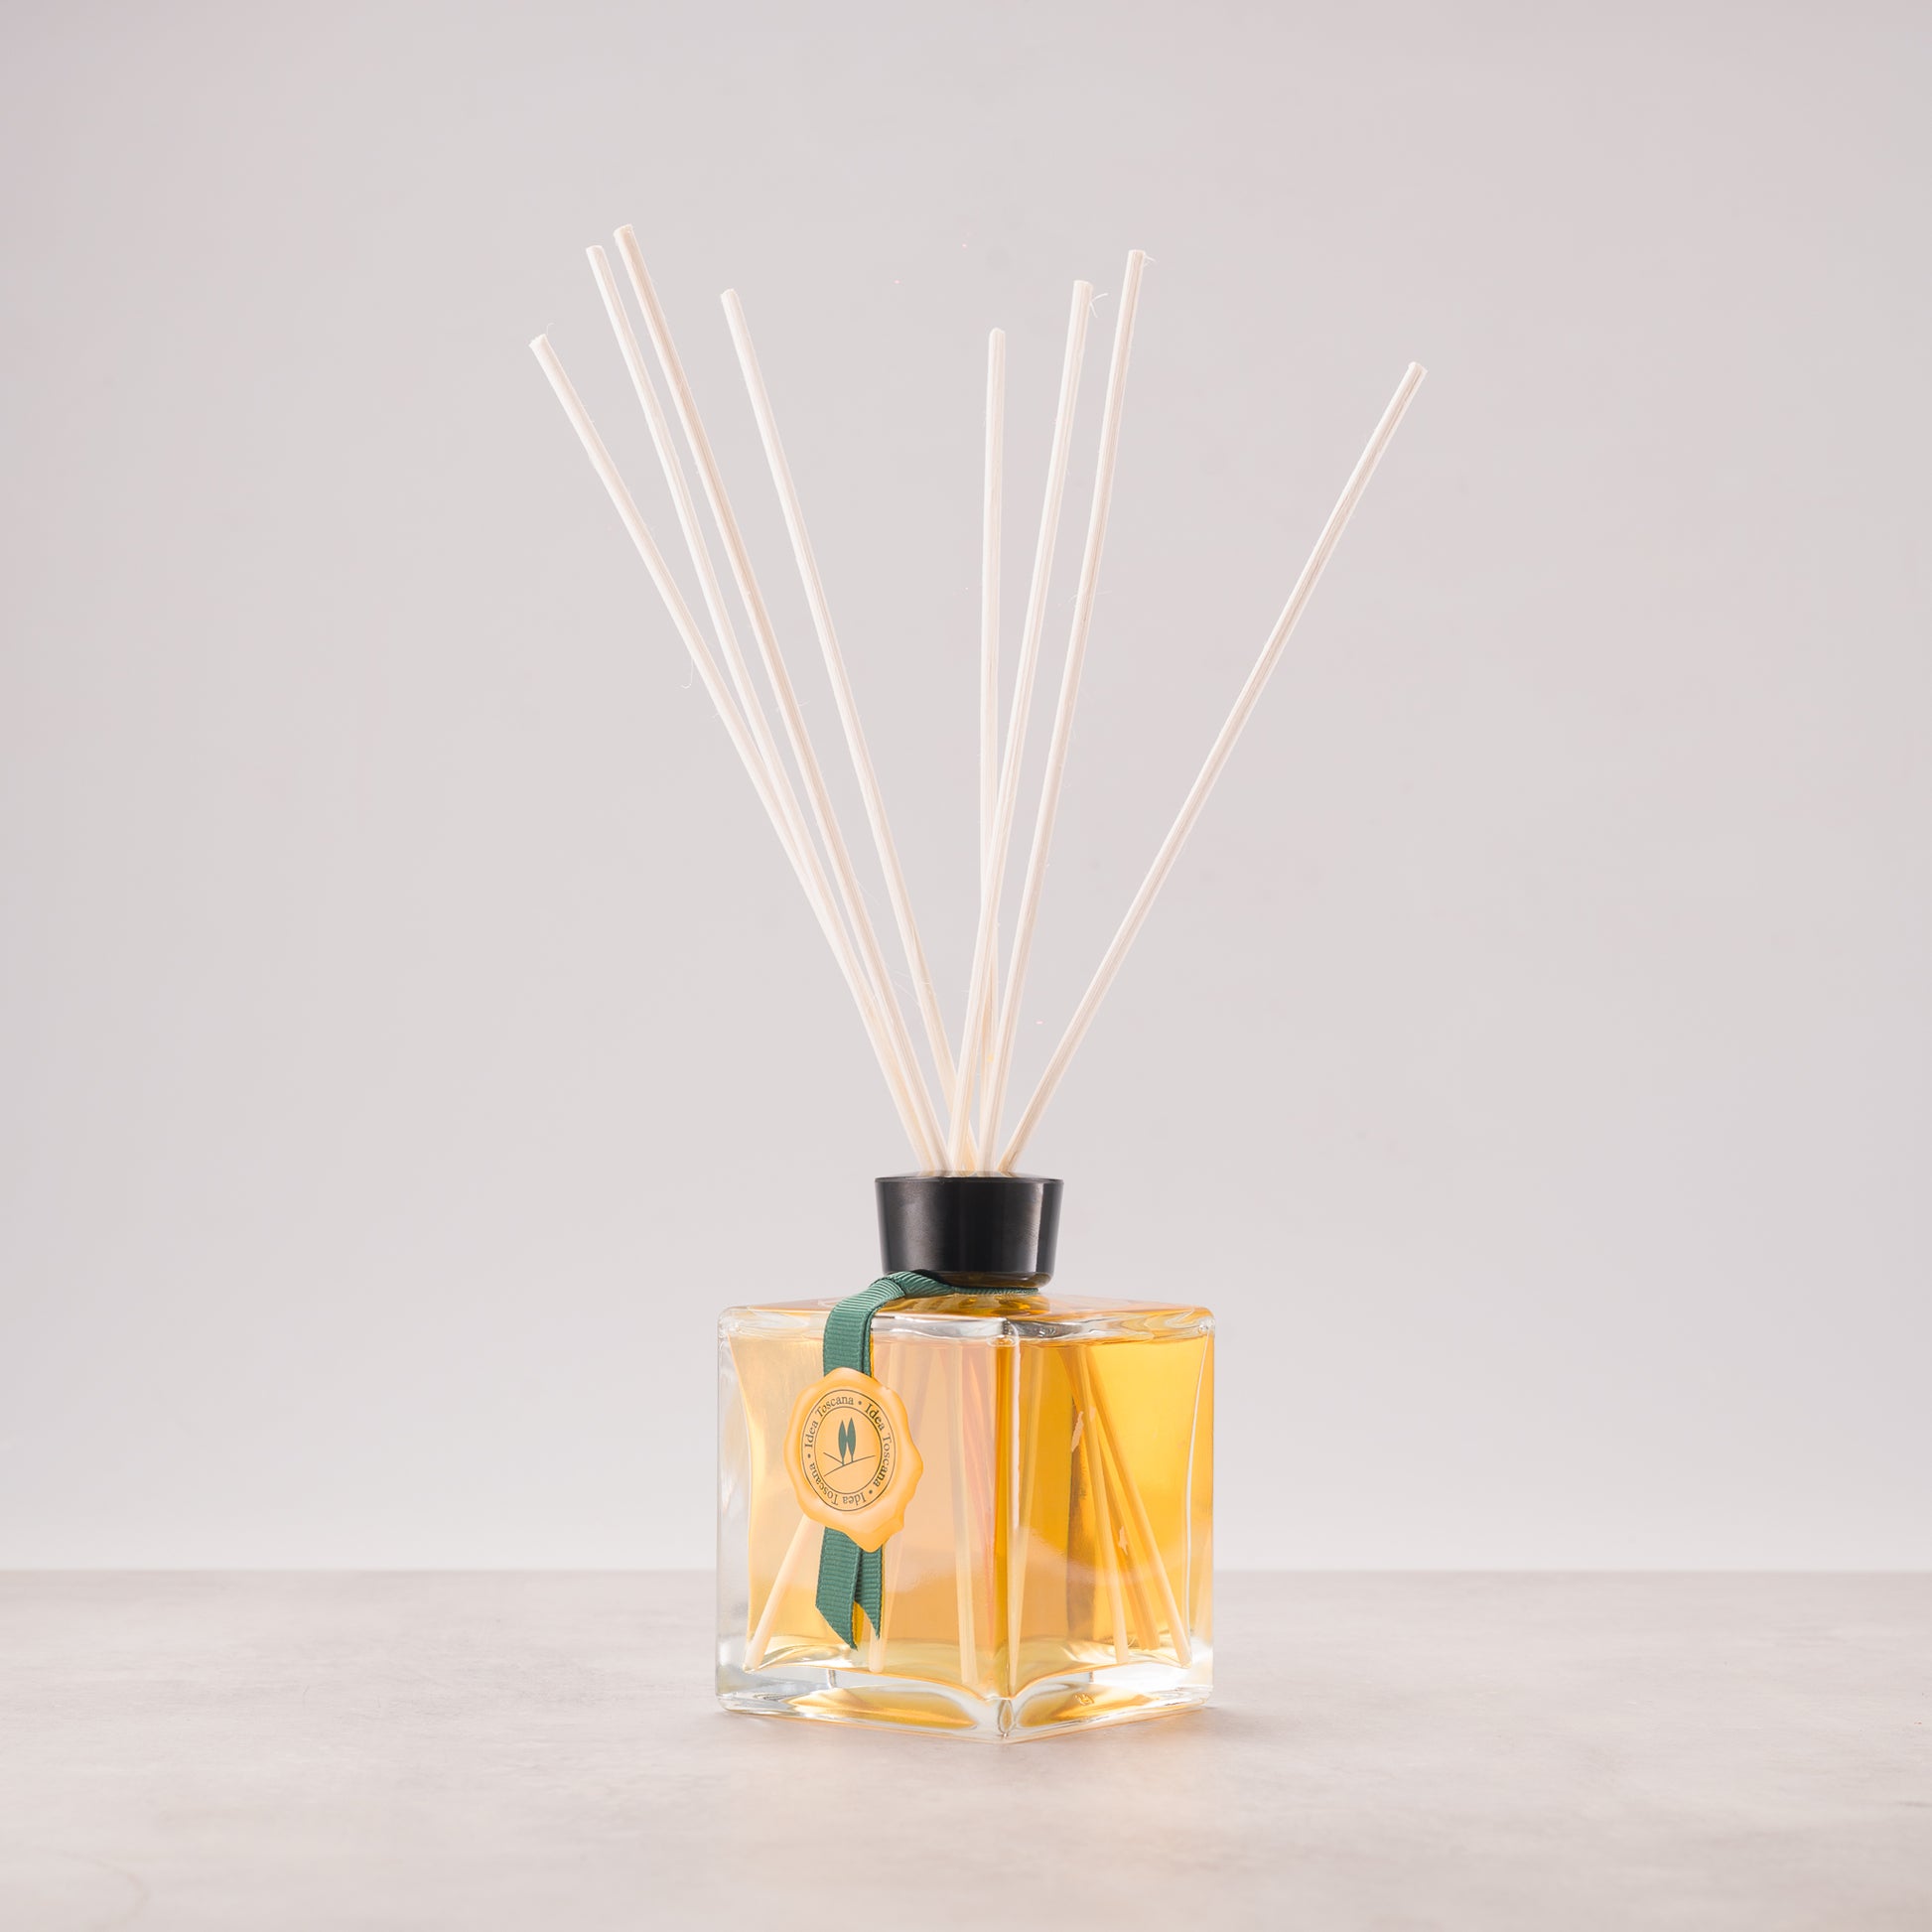 OLIVE Parfüm-Nachfüller – Idea Toscana